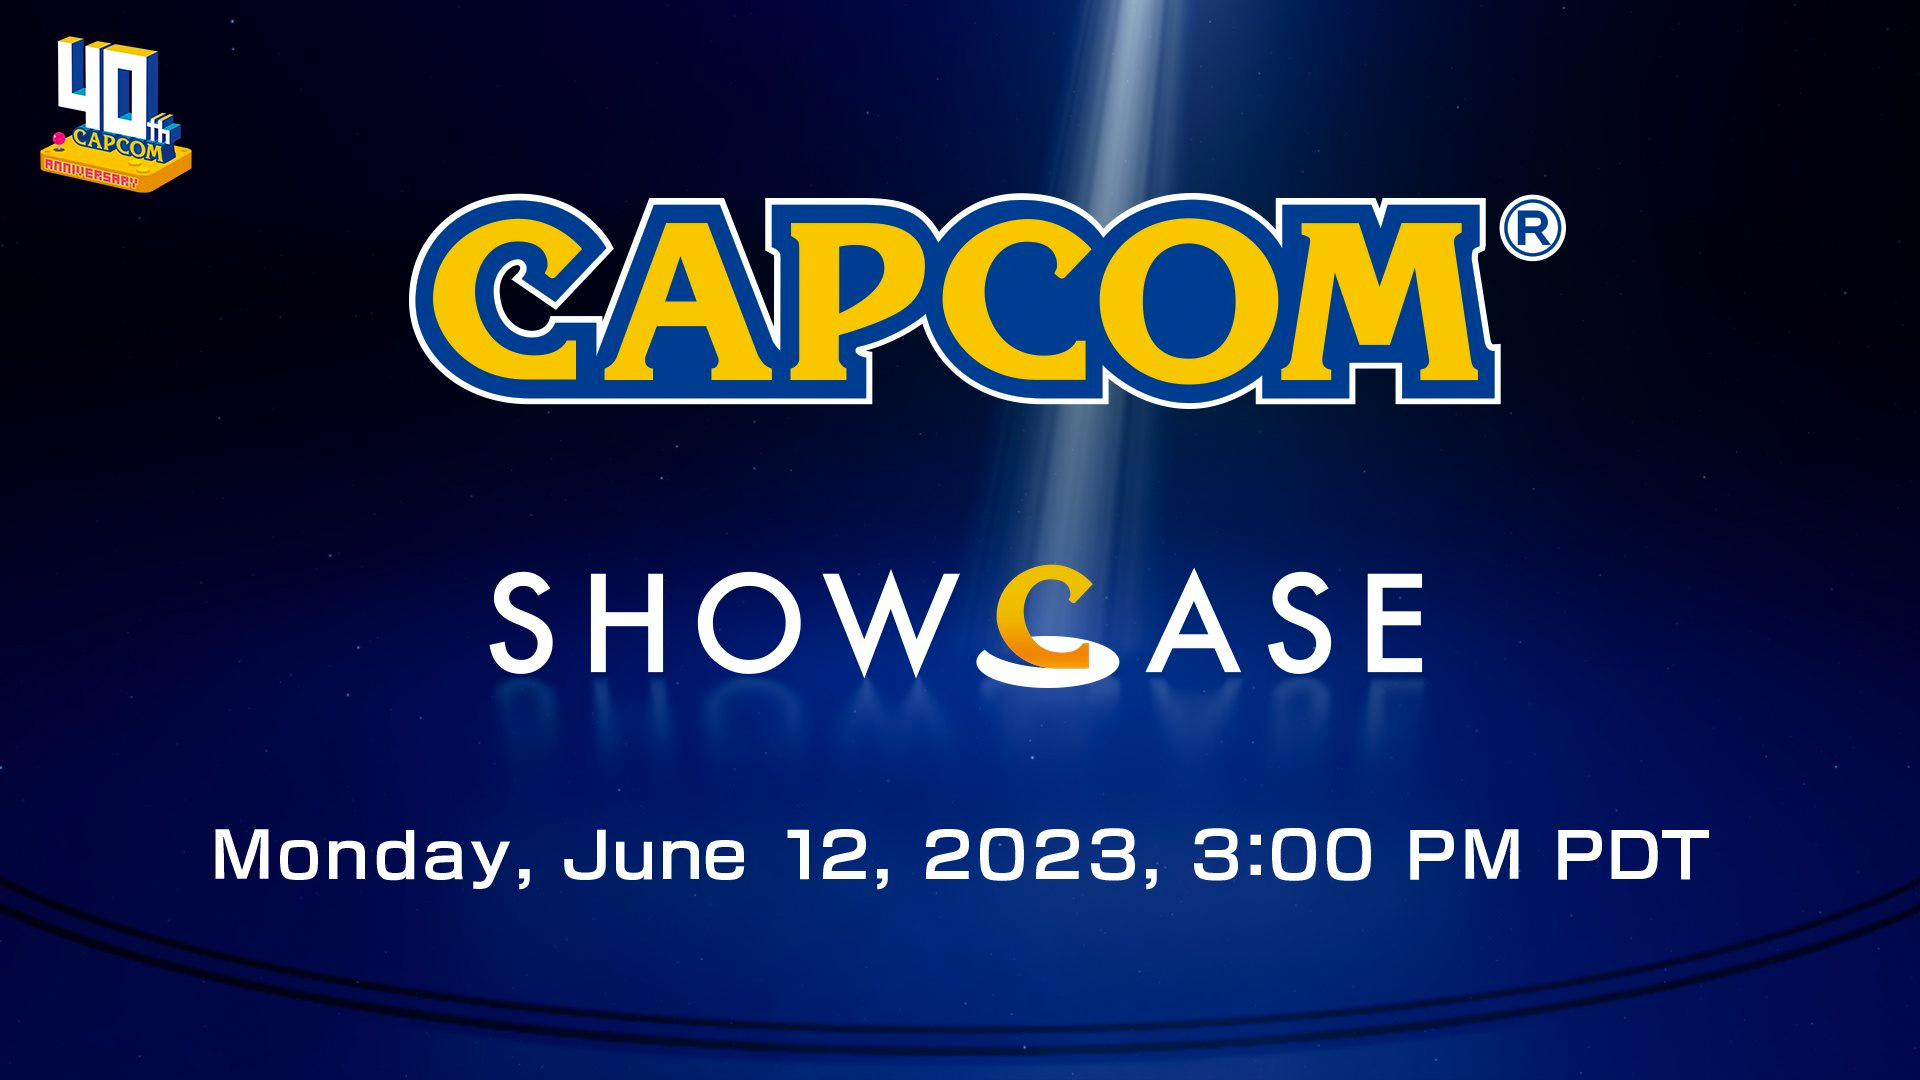 Detalles de Capcom Showcase 2023